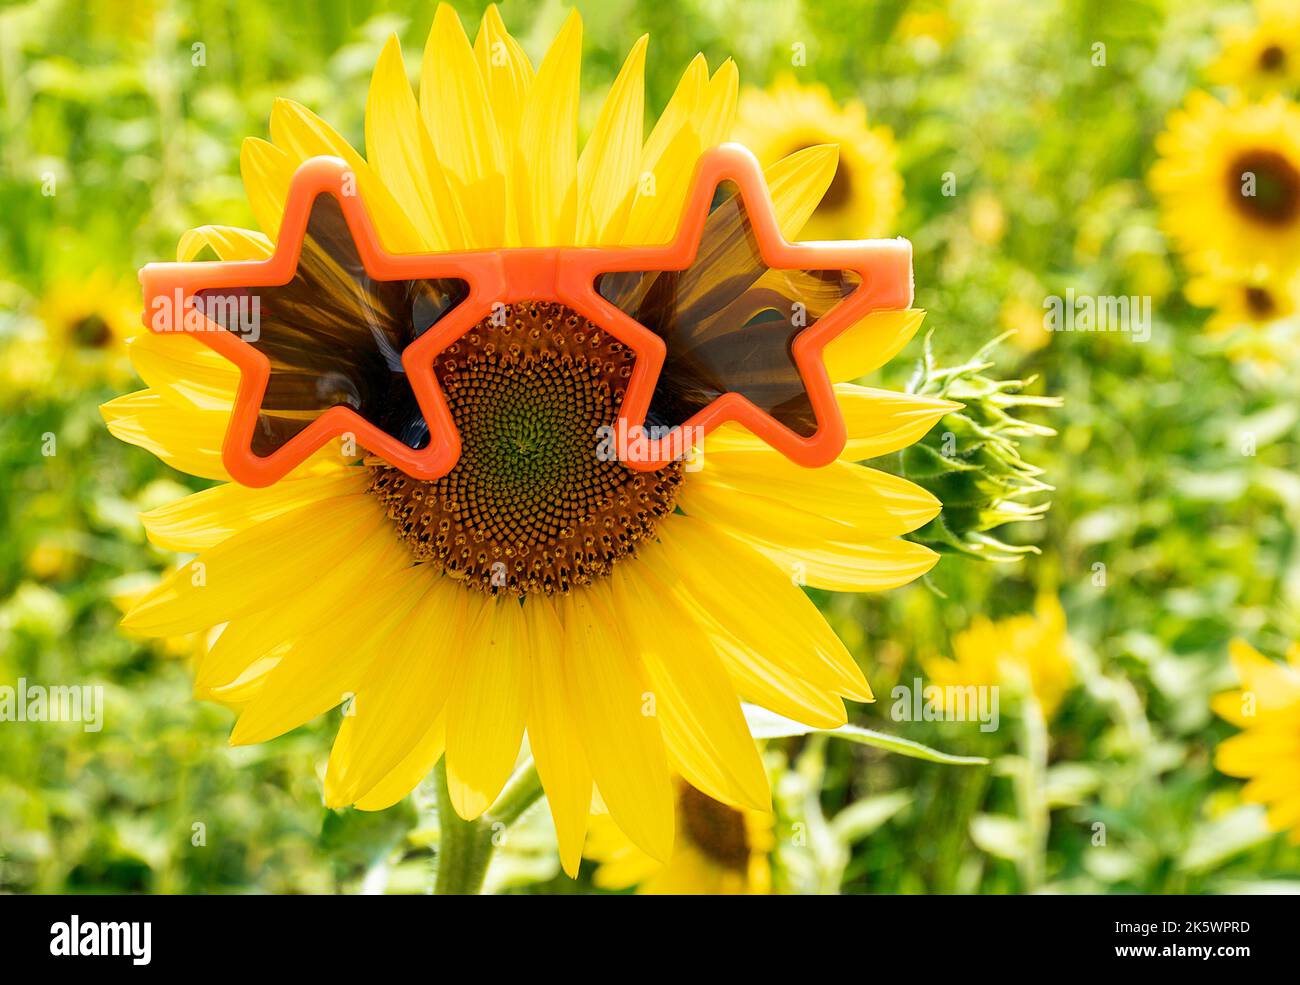 Orange star sunglasses on bright yellow sunflower in a field Stock Photo